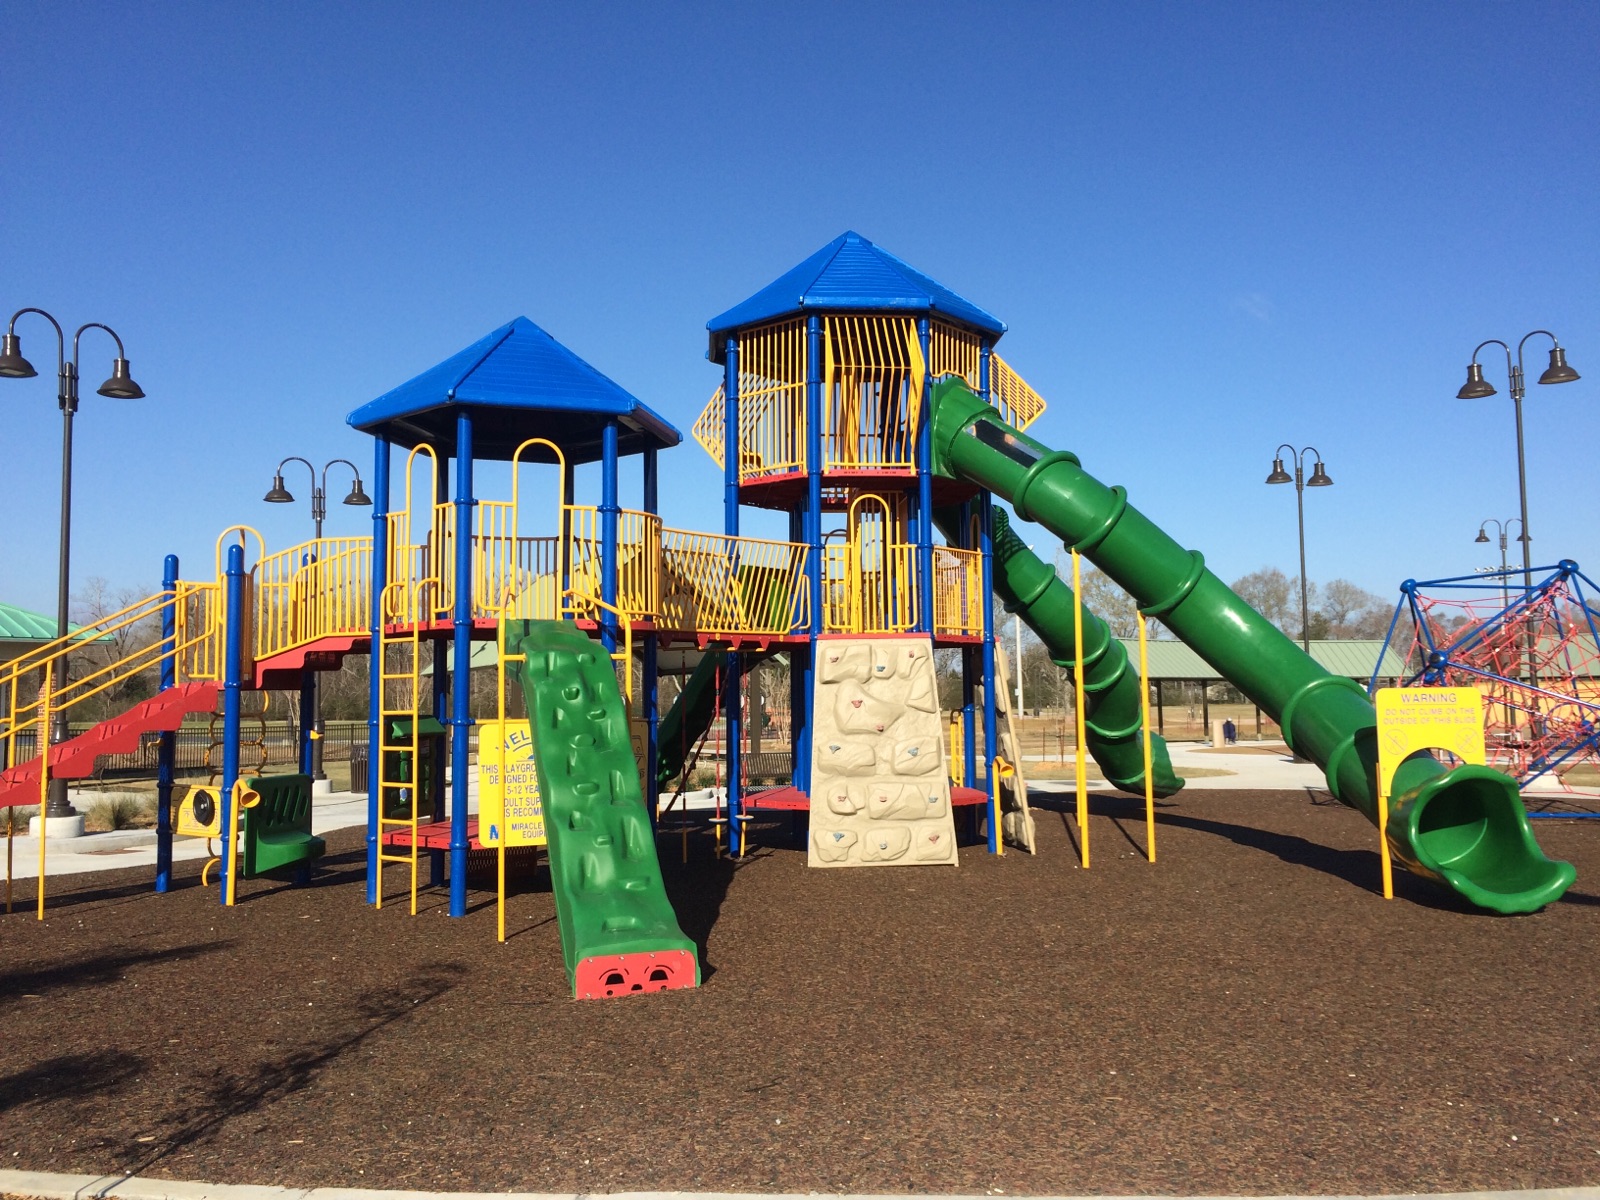 Community or Neighborhood Park? | BREC - Parks & Recreation in East ...